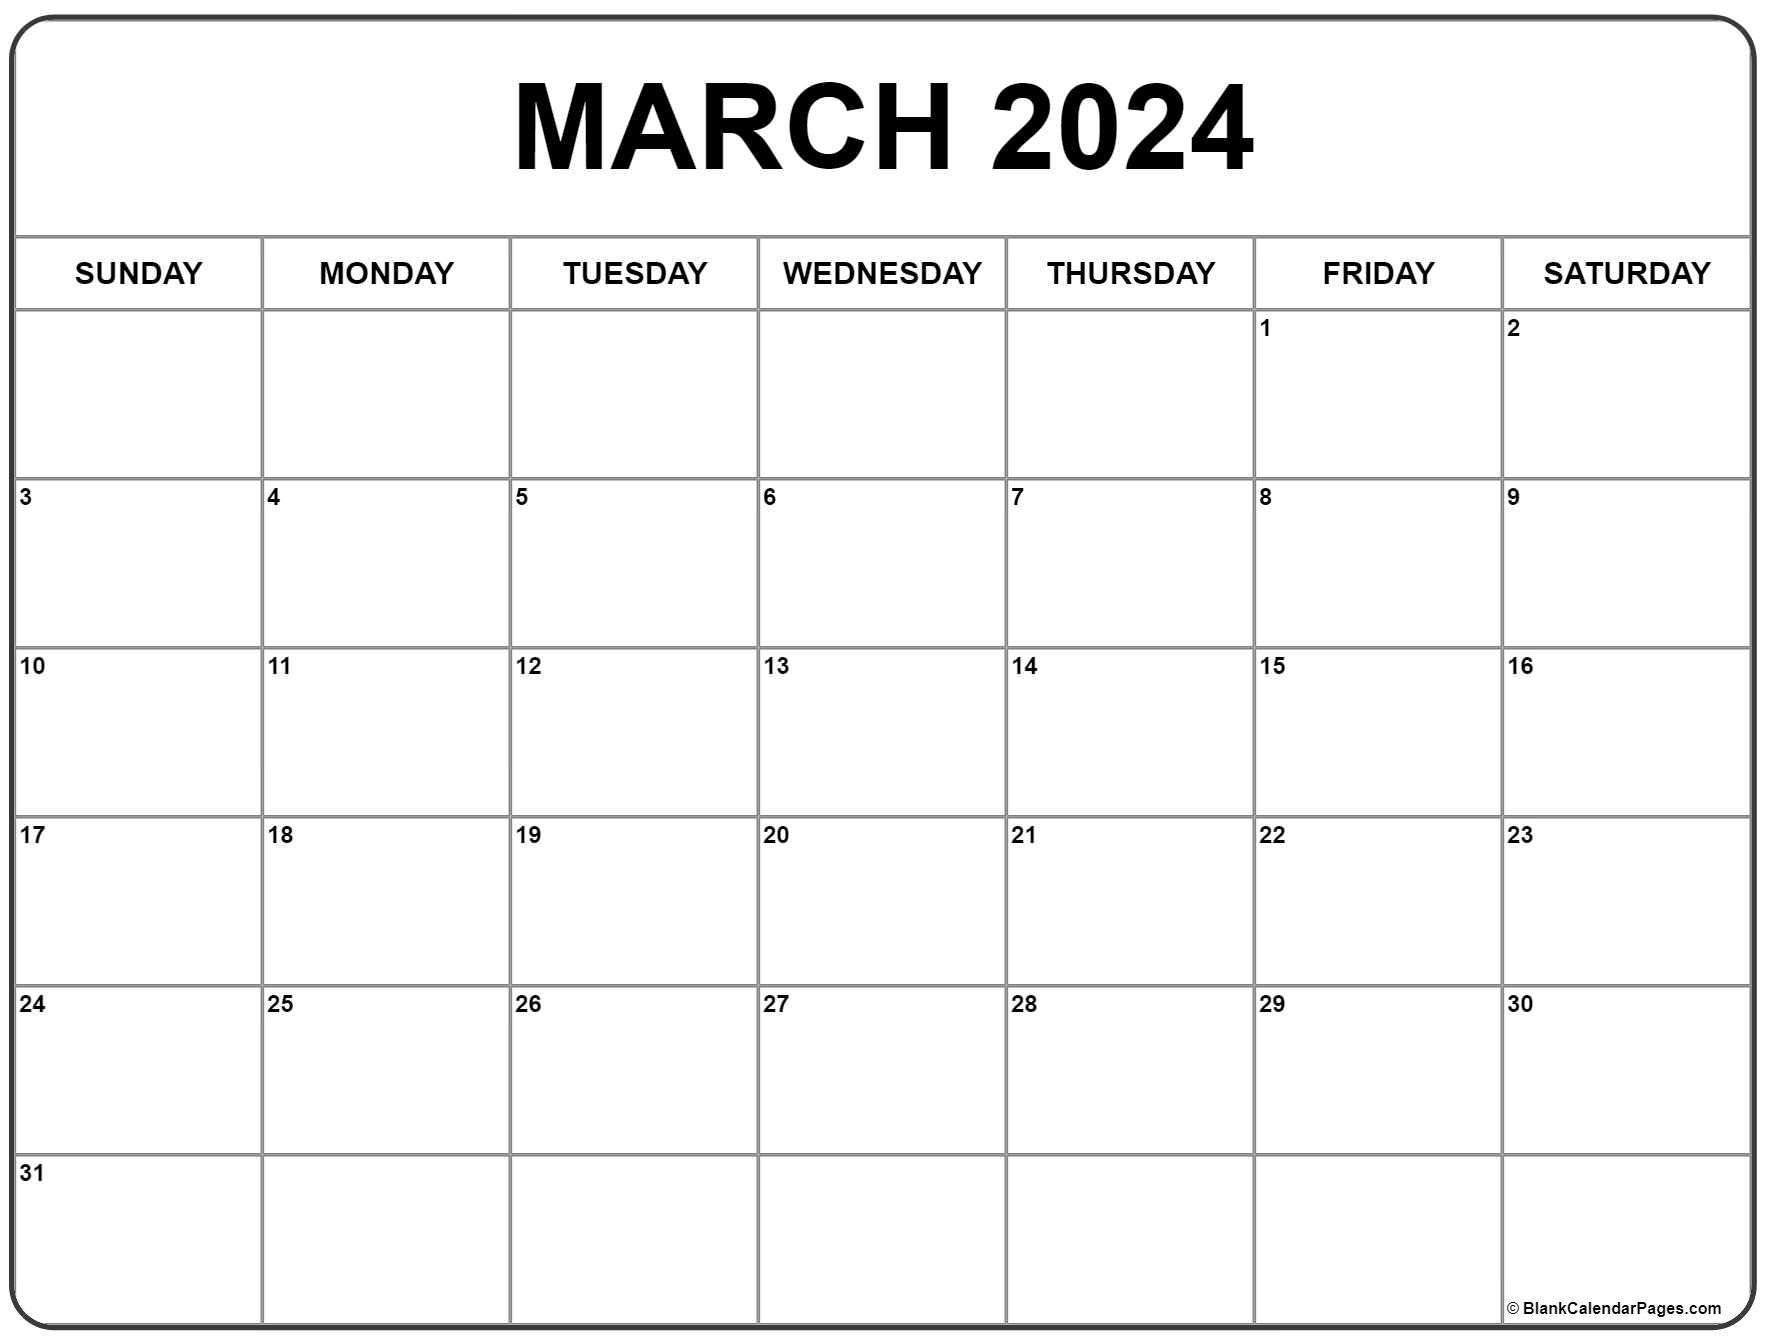 Free 2022 March Calendar March 2022 Calendar | Free Printable Calendar Templates